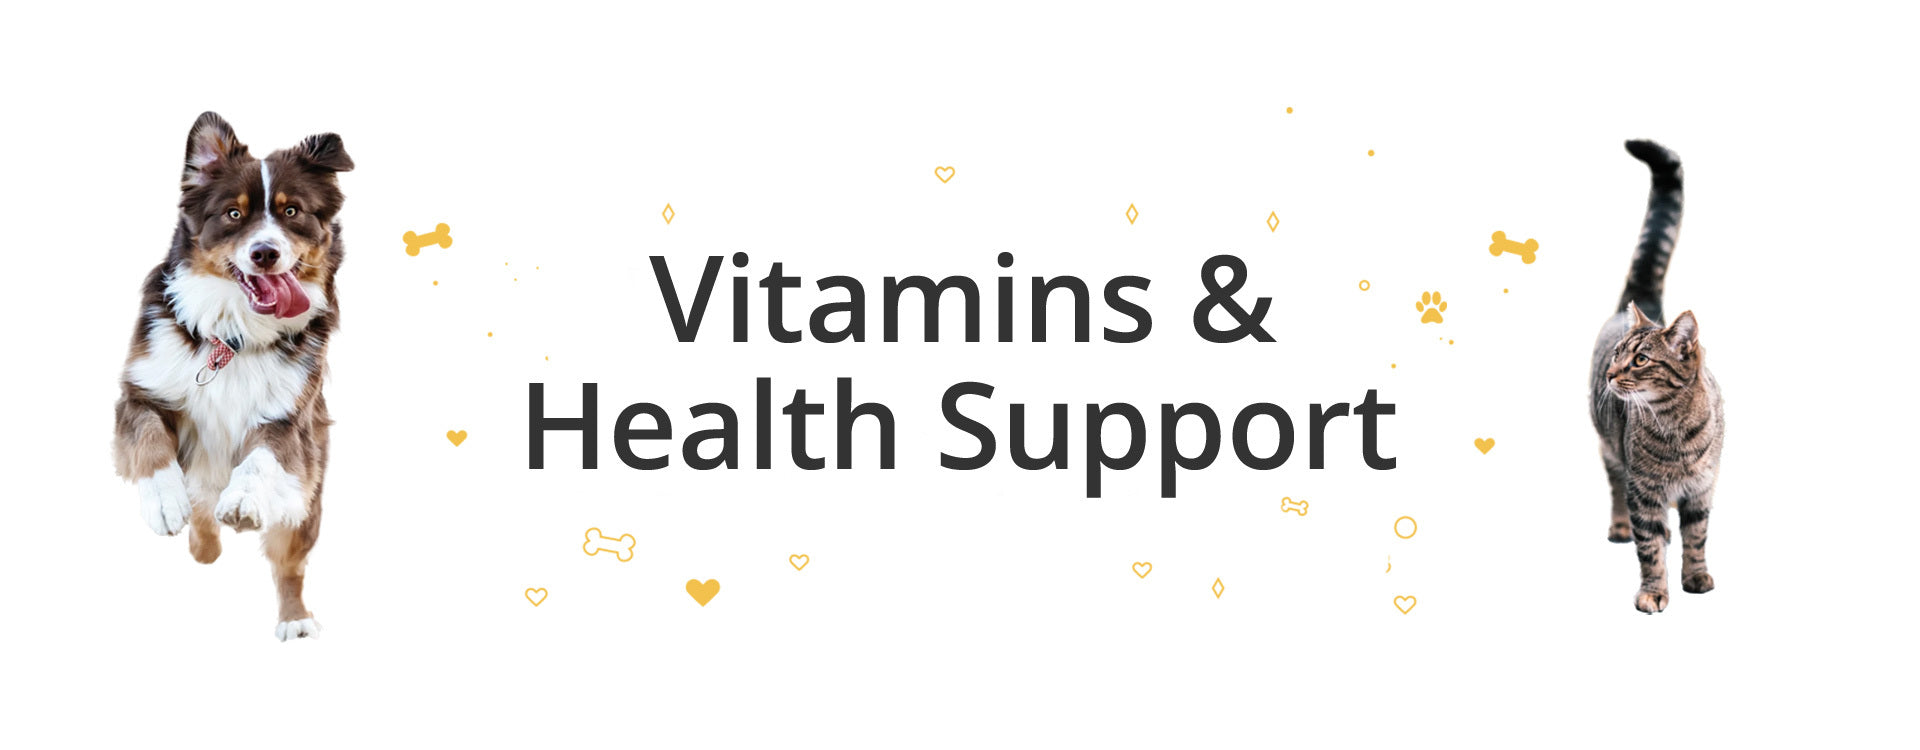 Vitamin & Health Support